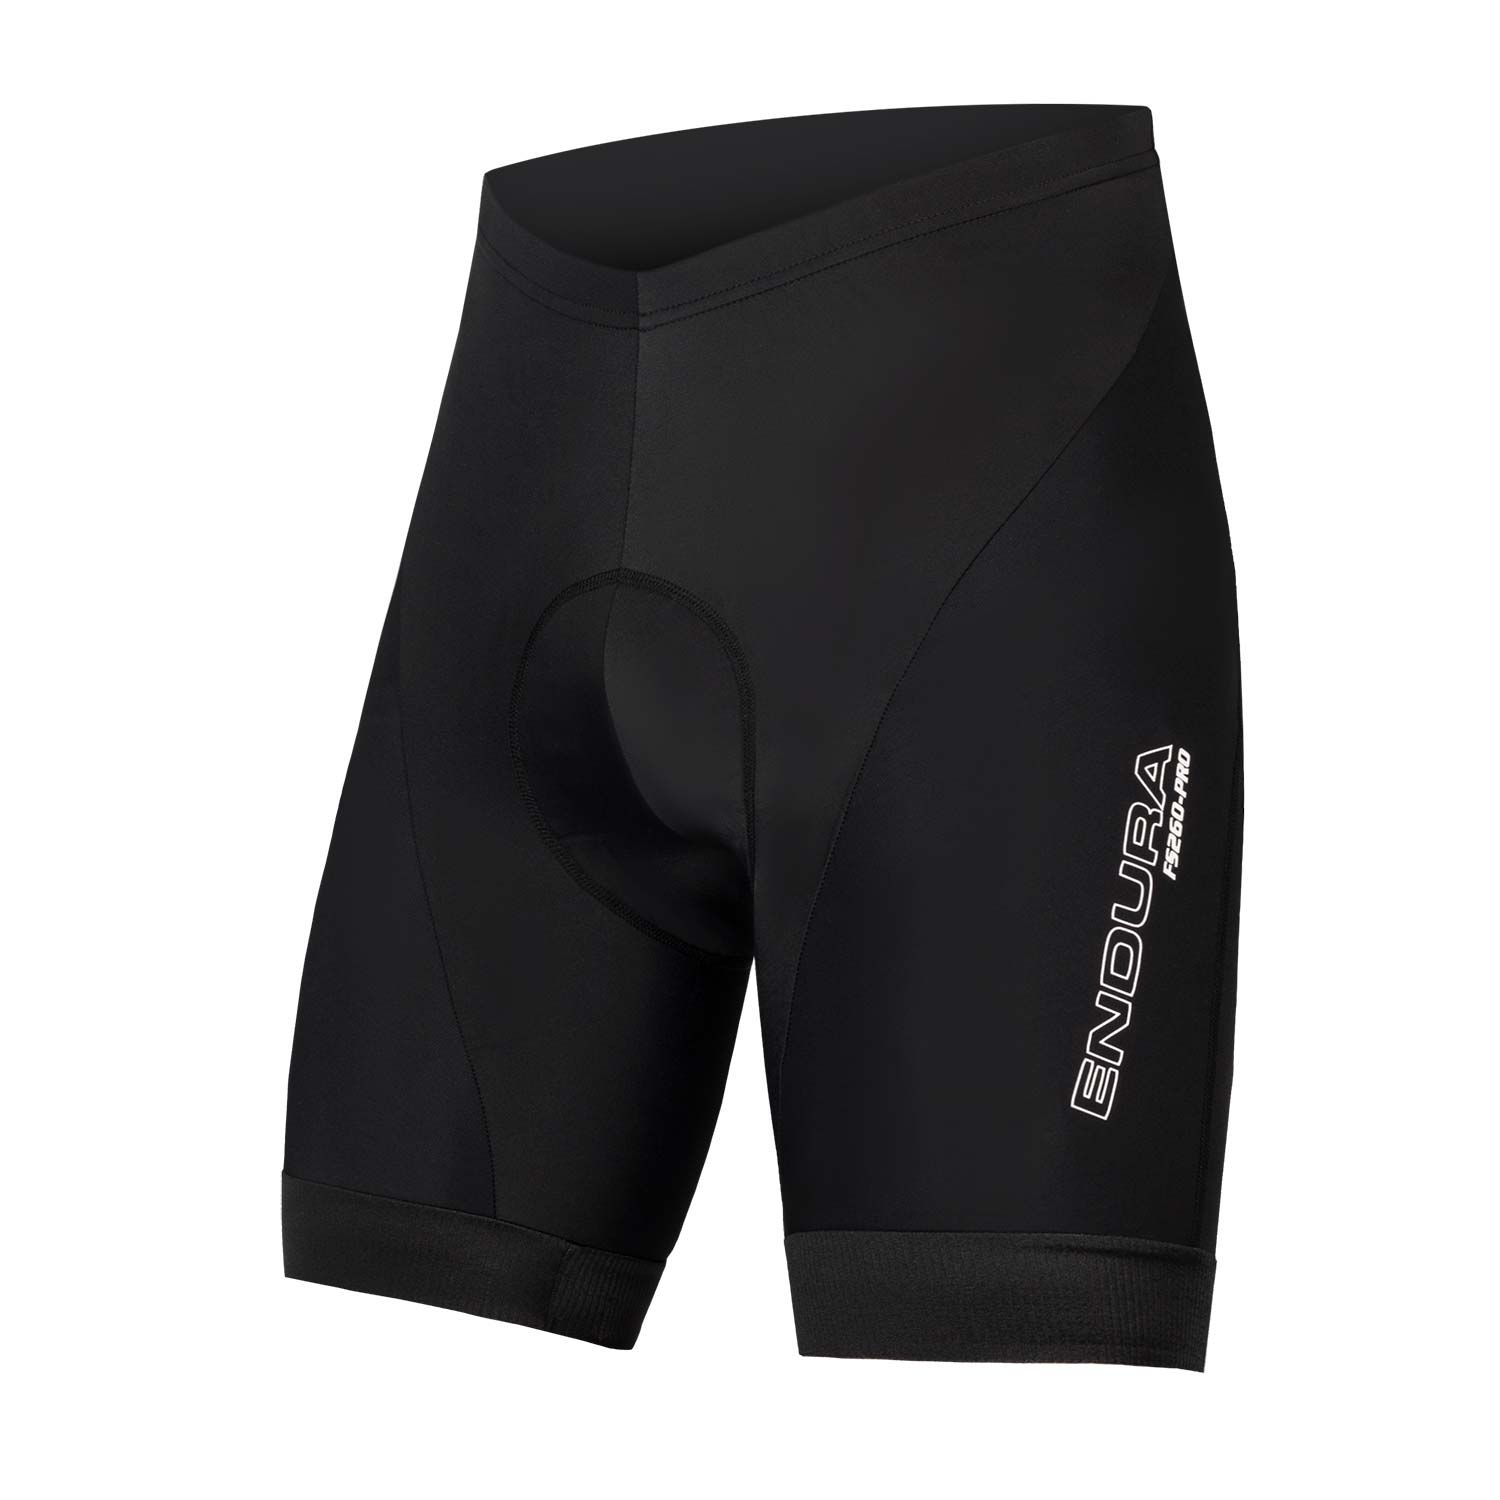 Endura FS260-Pro Shorts | Merlin Cycles